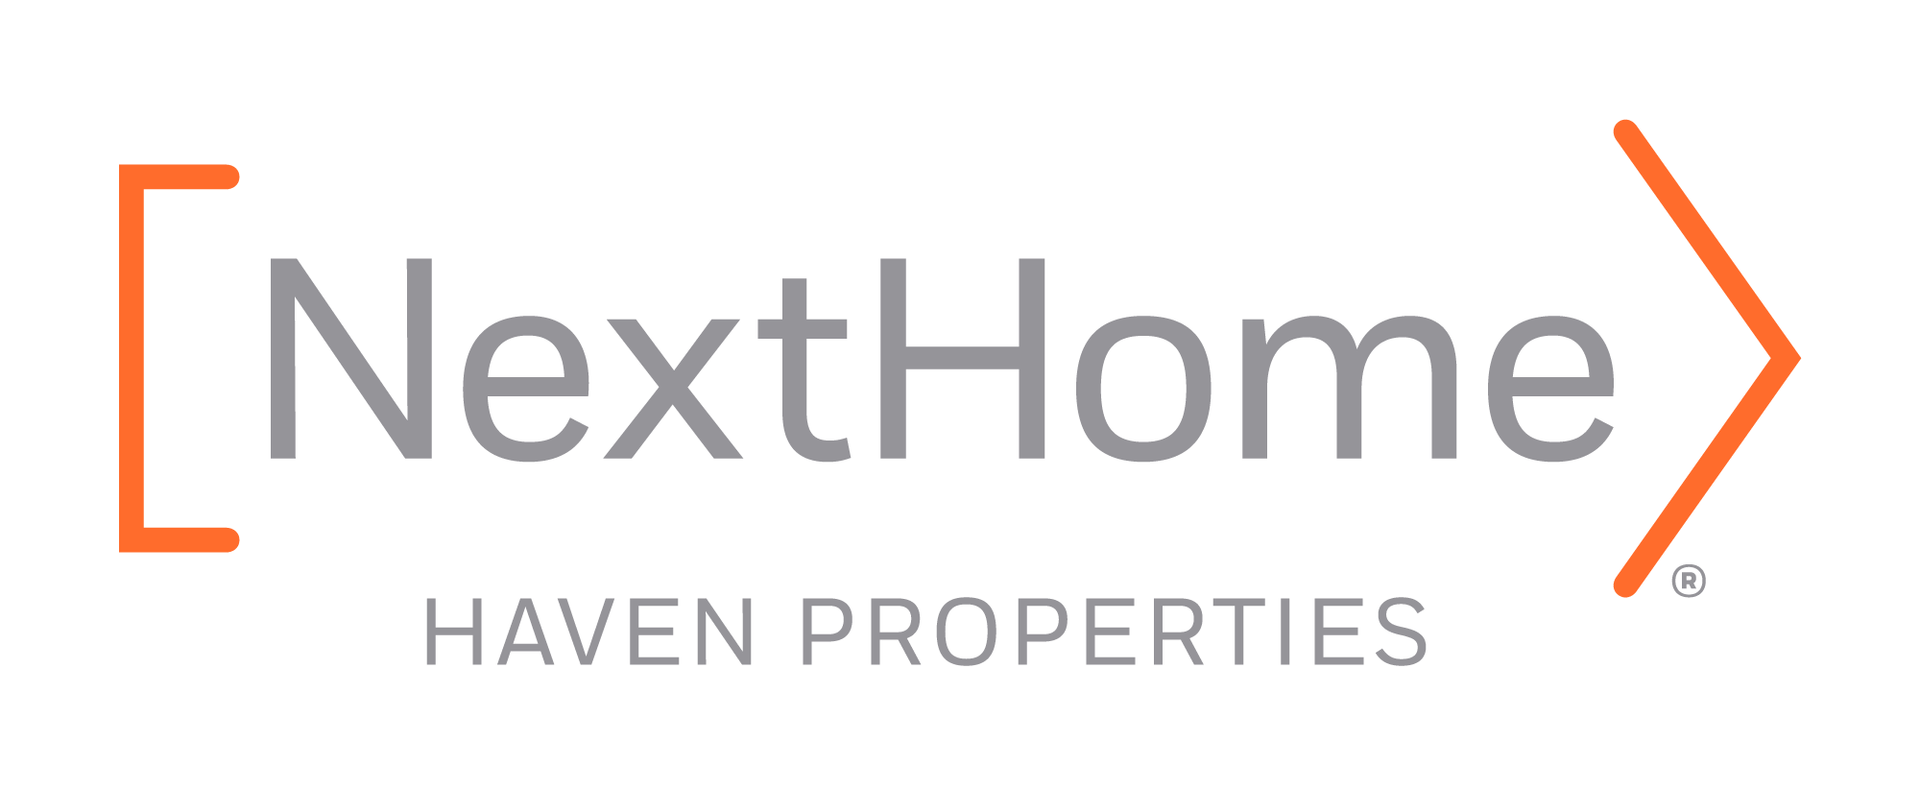 NextHome Haven Properties - header, go to homepage.